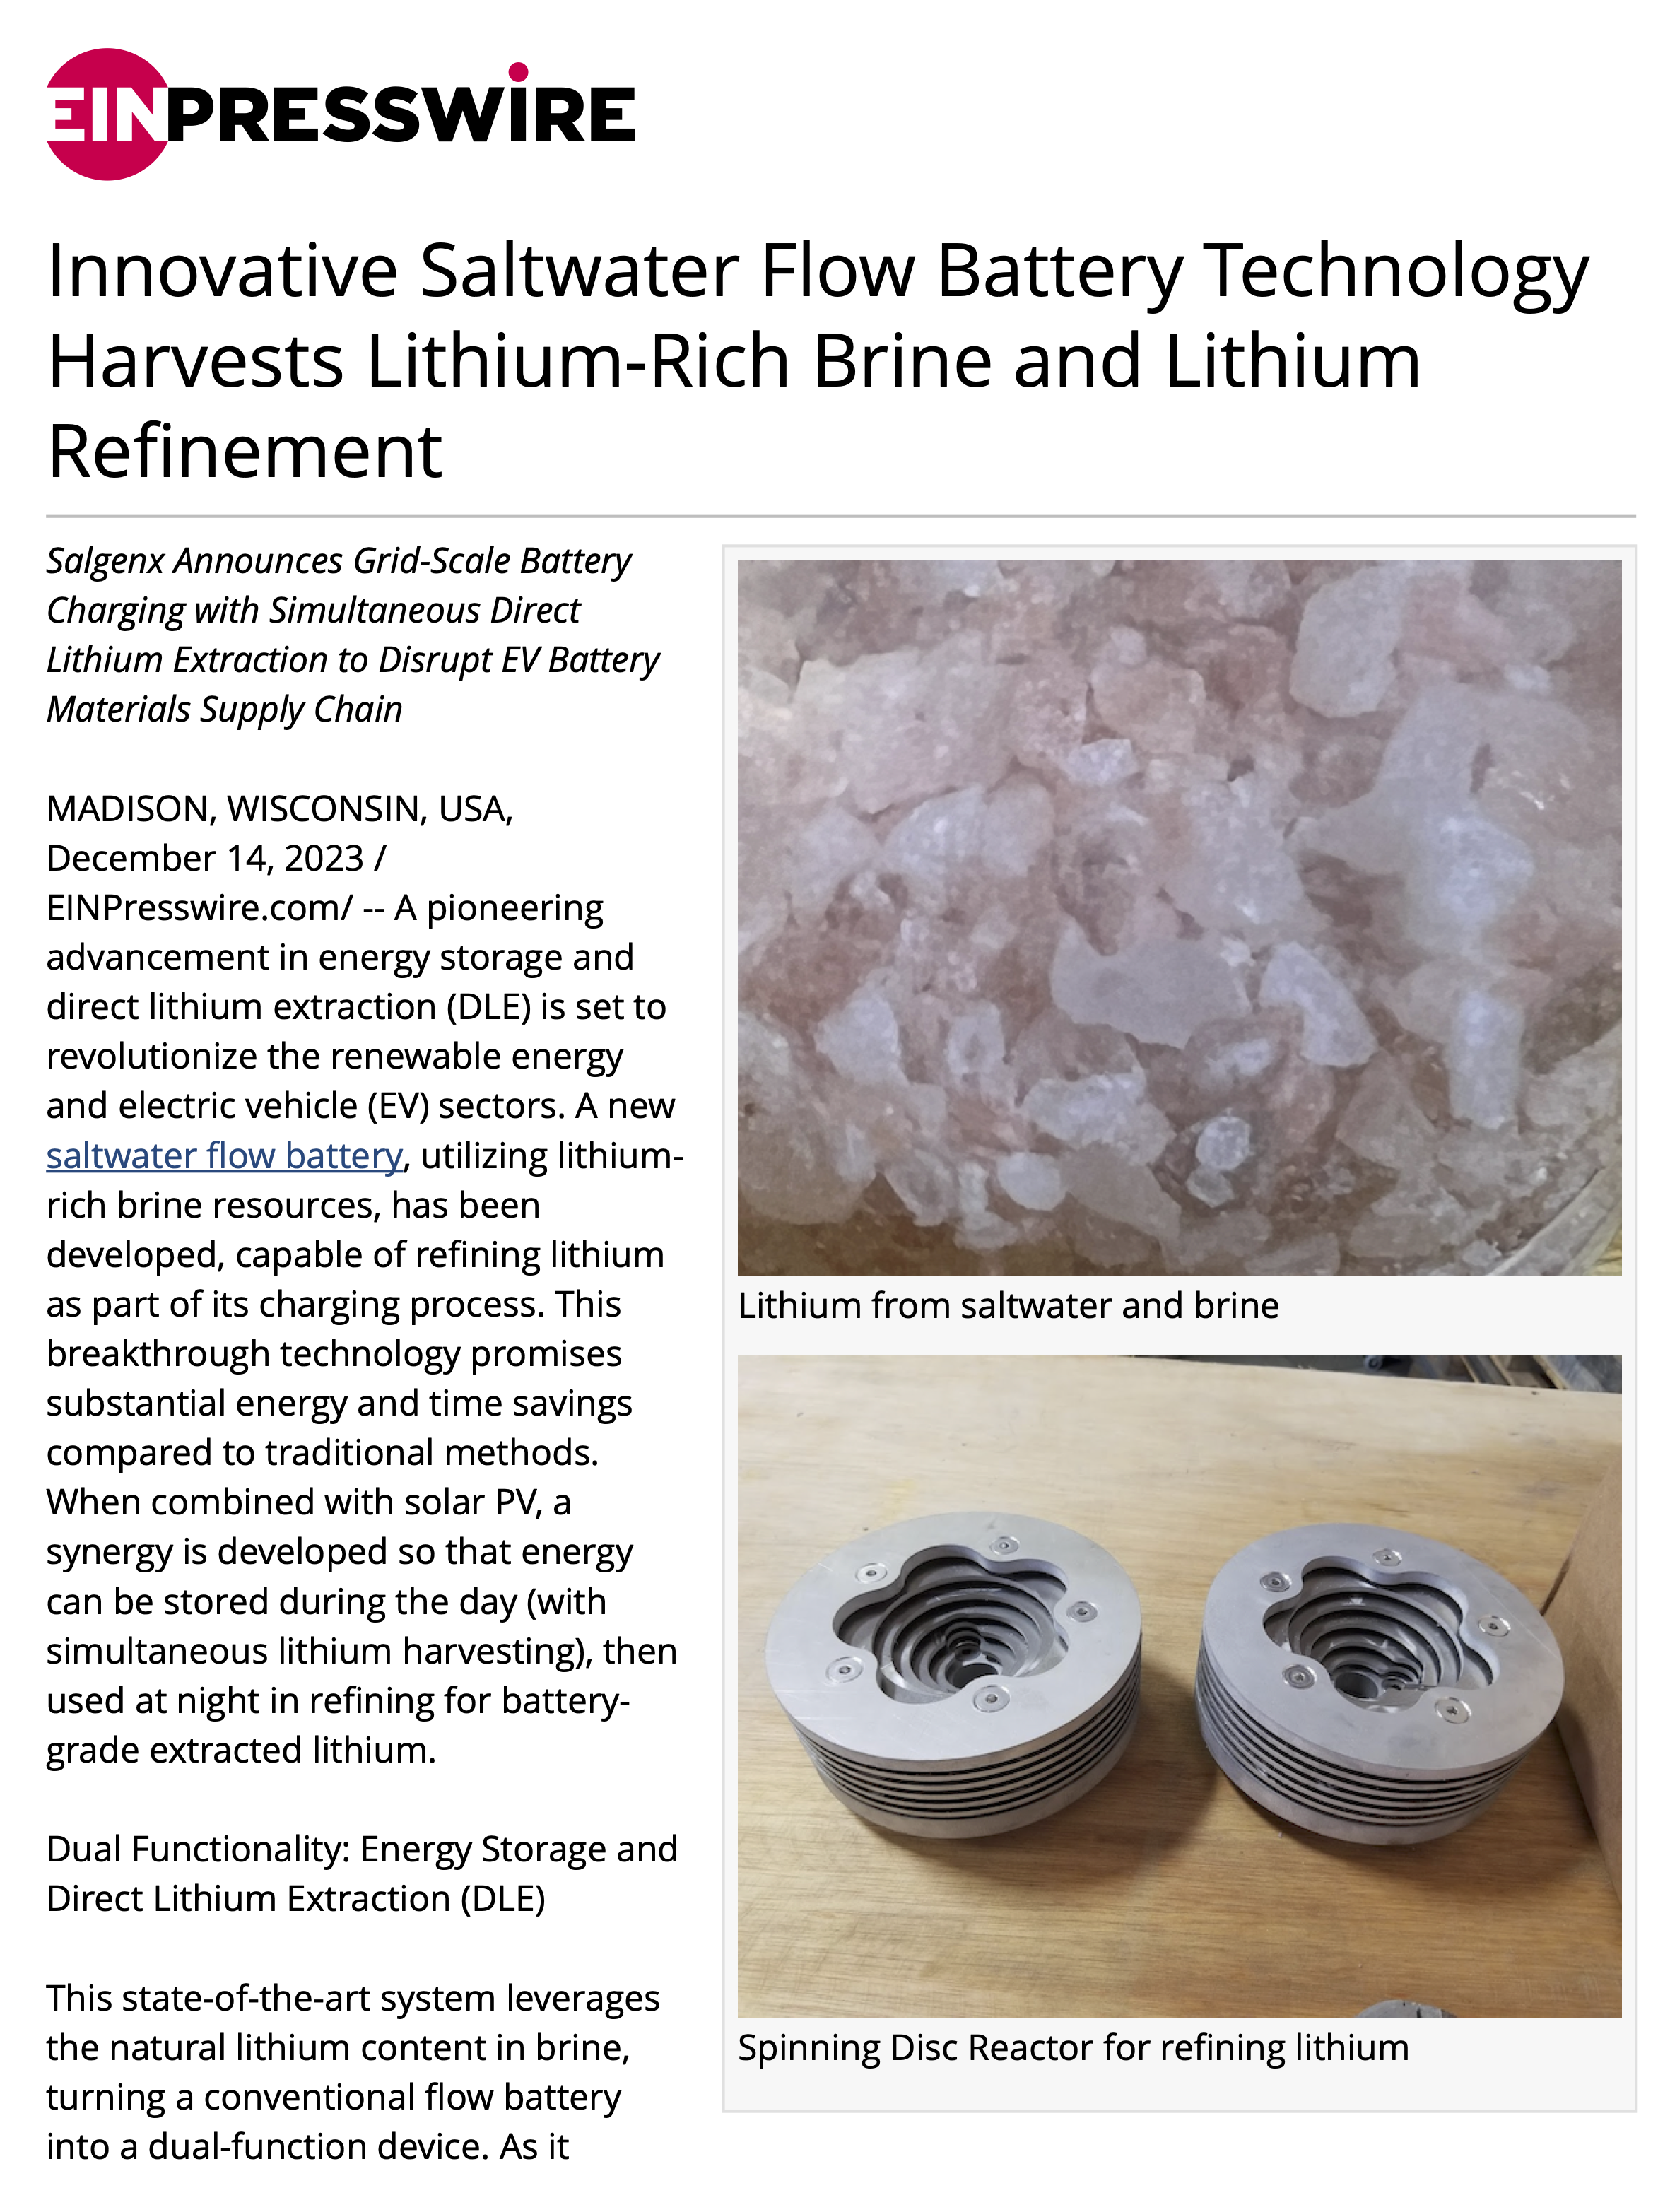 Innovative Saltwater Flow Battery Technology Harvests Lithium-Rich Brine and Lithium Refinement